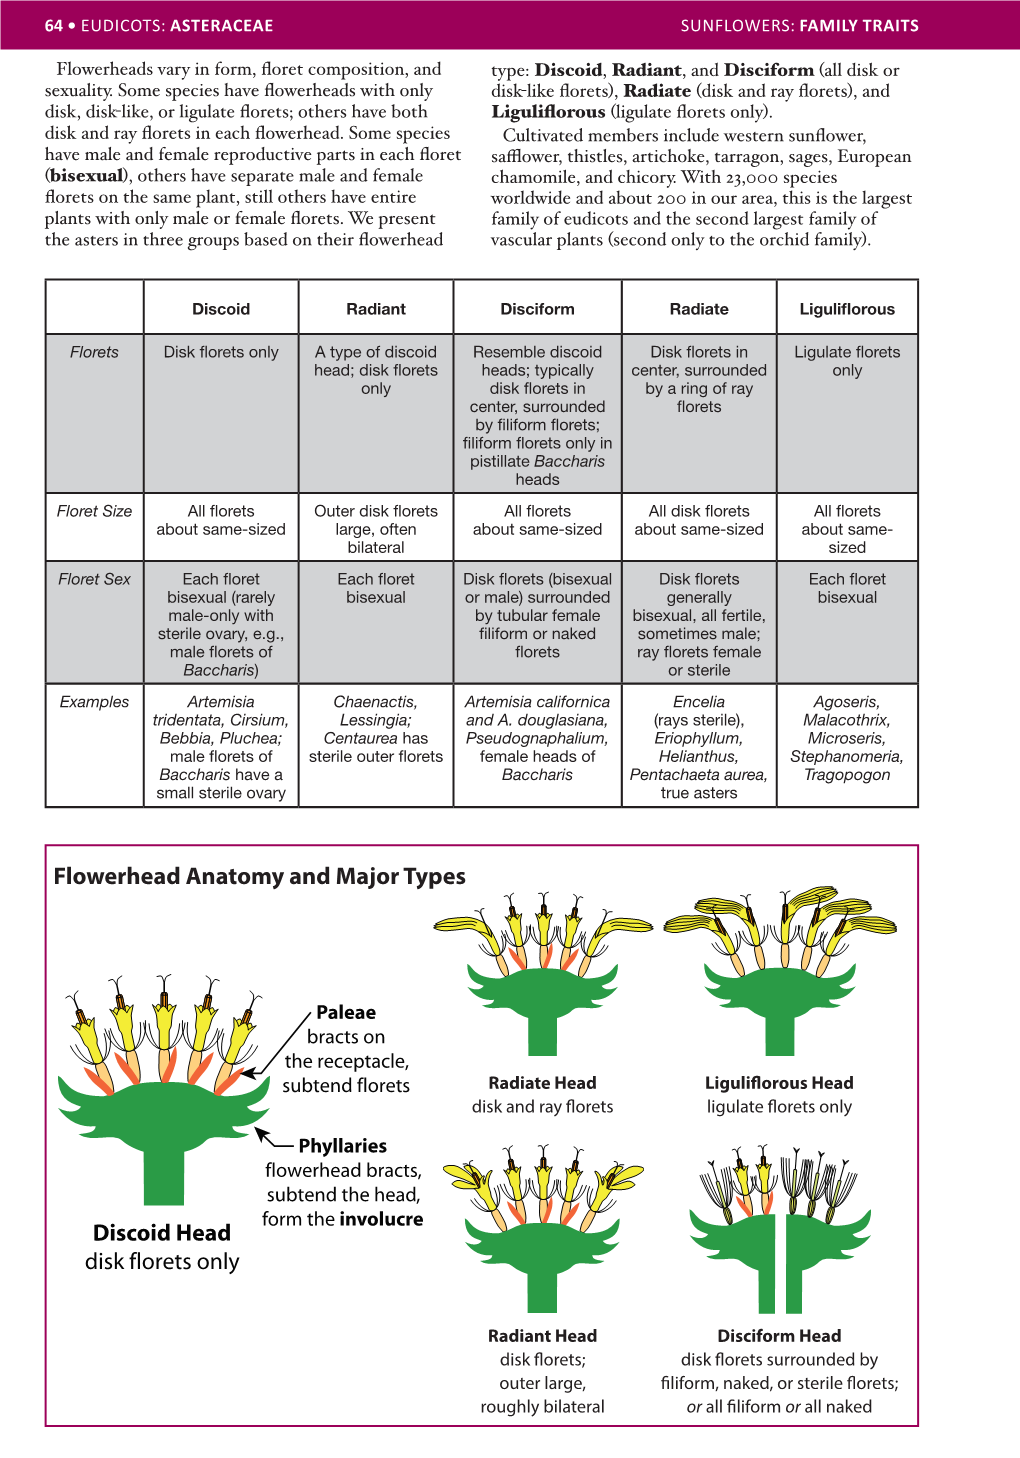 Flowerhead Anatomy and Major Types